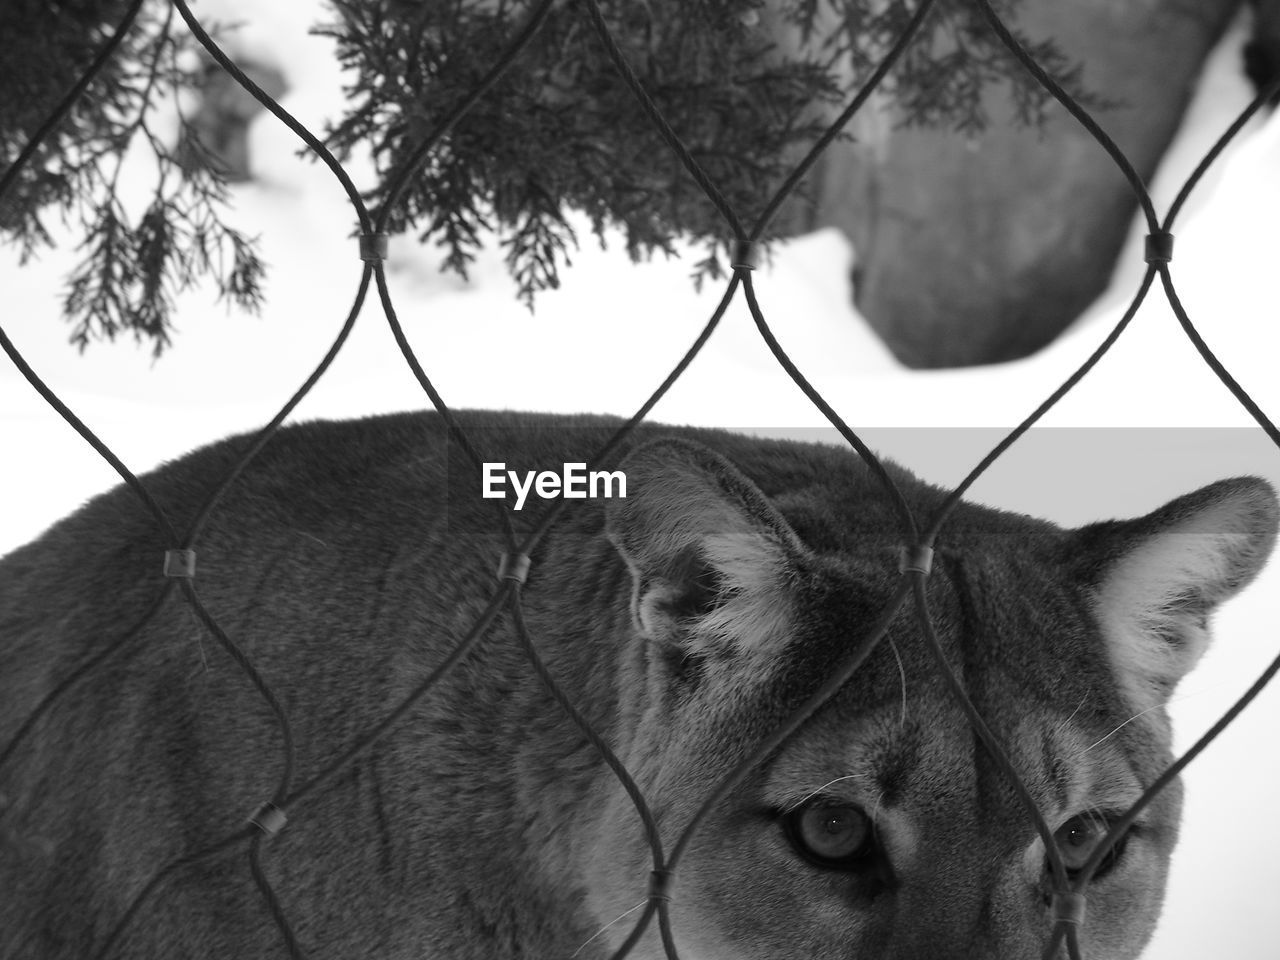 Portrait of mountain lion seen through fence